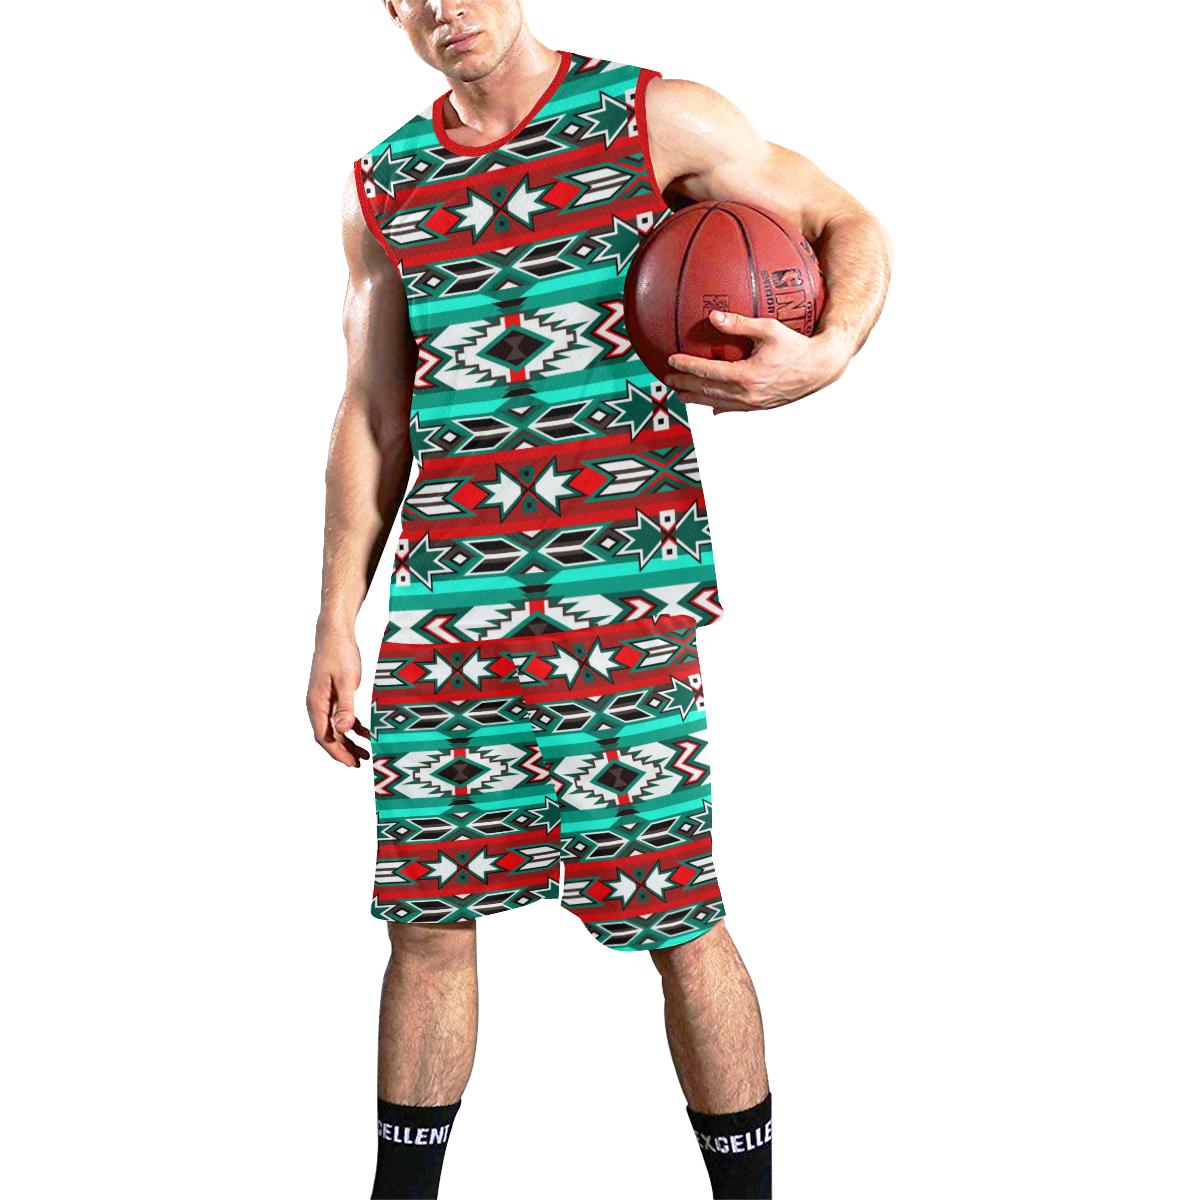 Southwest Journey All Over Print Basketball Uniform Basketball Uniform e-joyer 